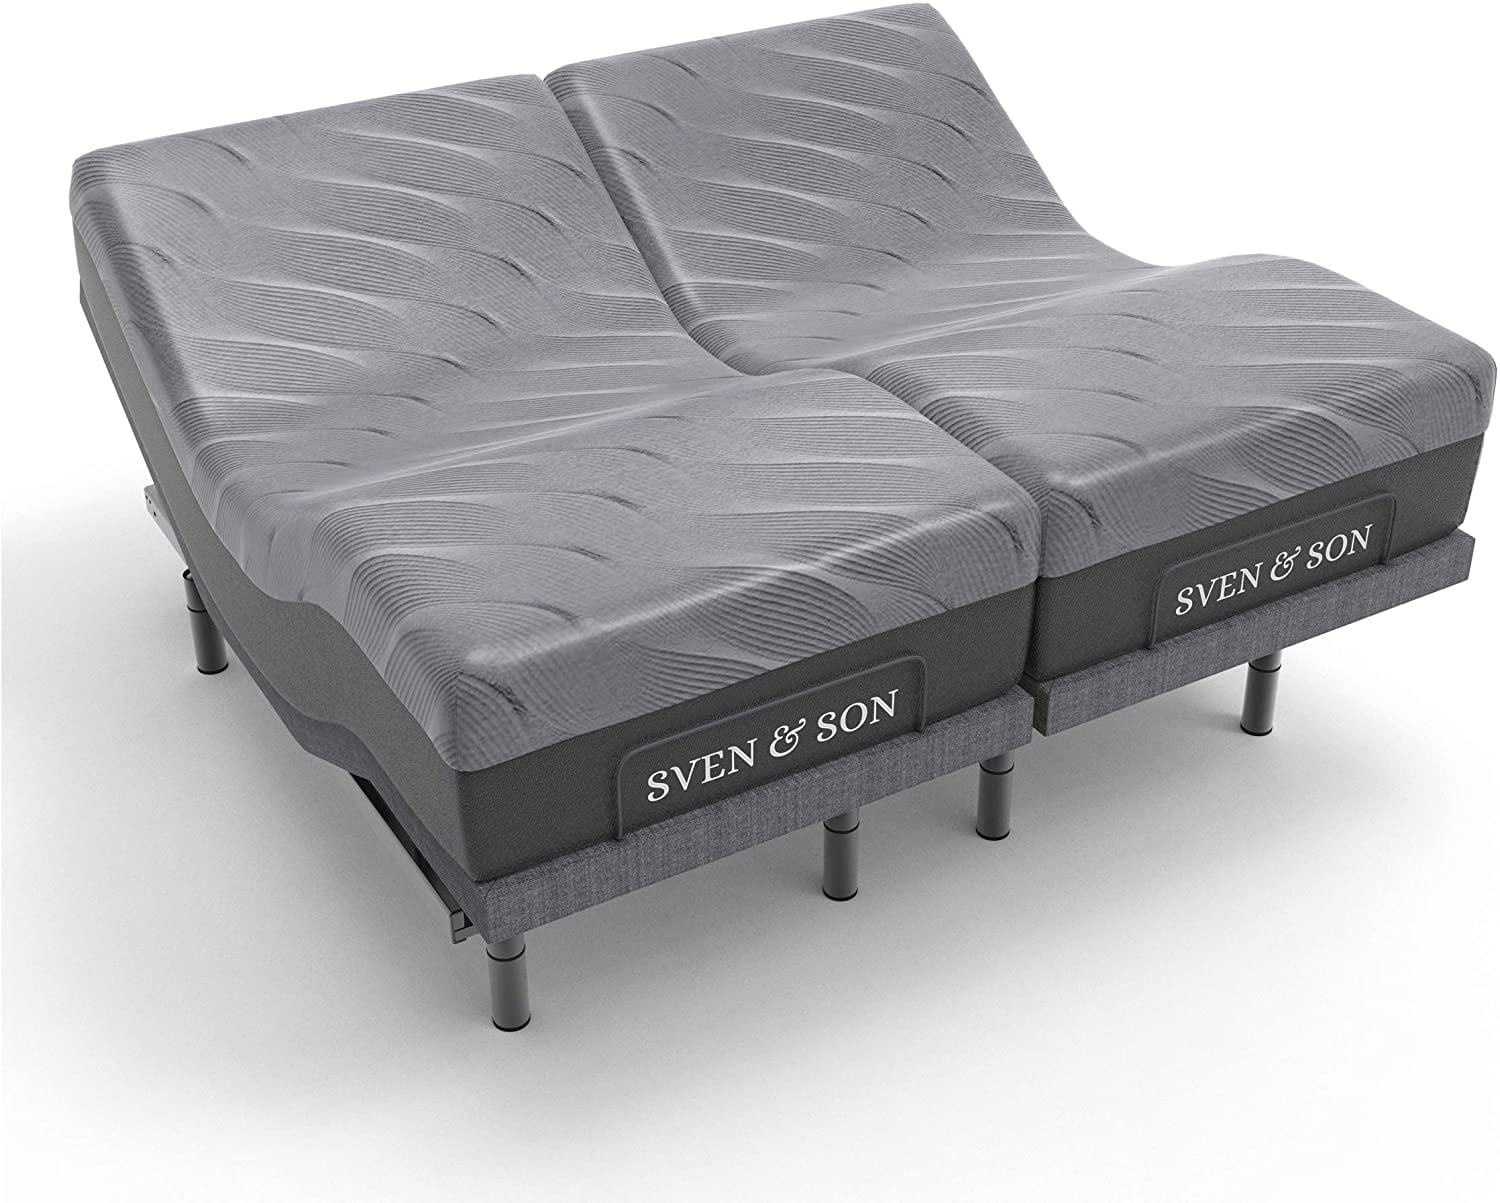 Sven Son Split King Adjustable Bed, Can You Put A Hybrid Mattress On An Adjustable Bed